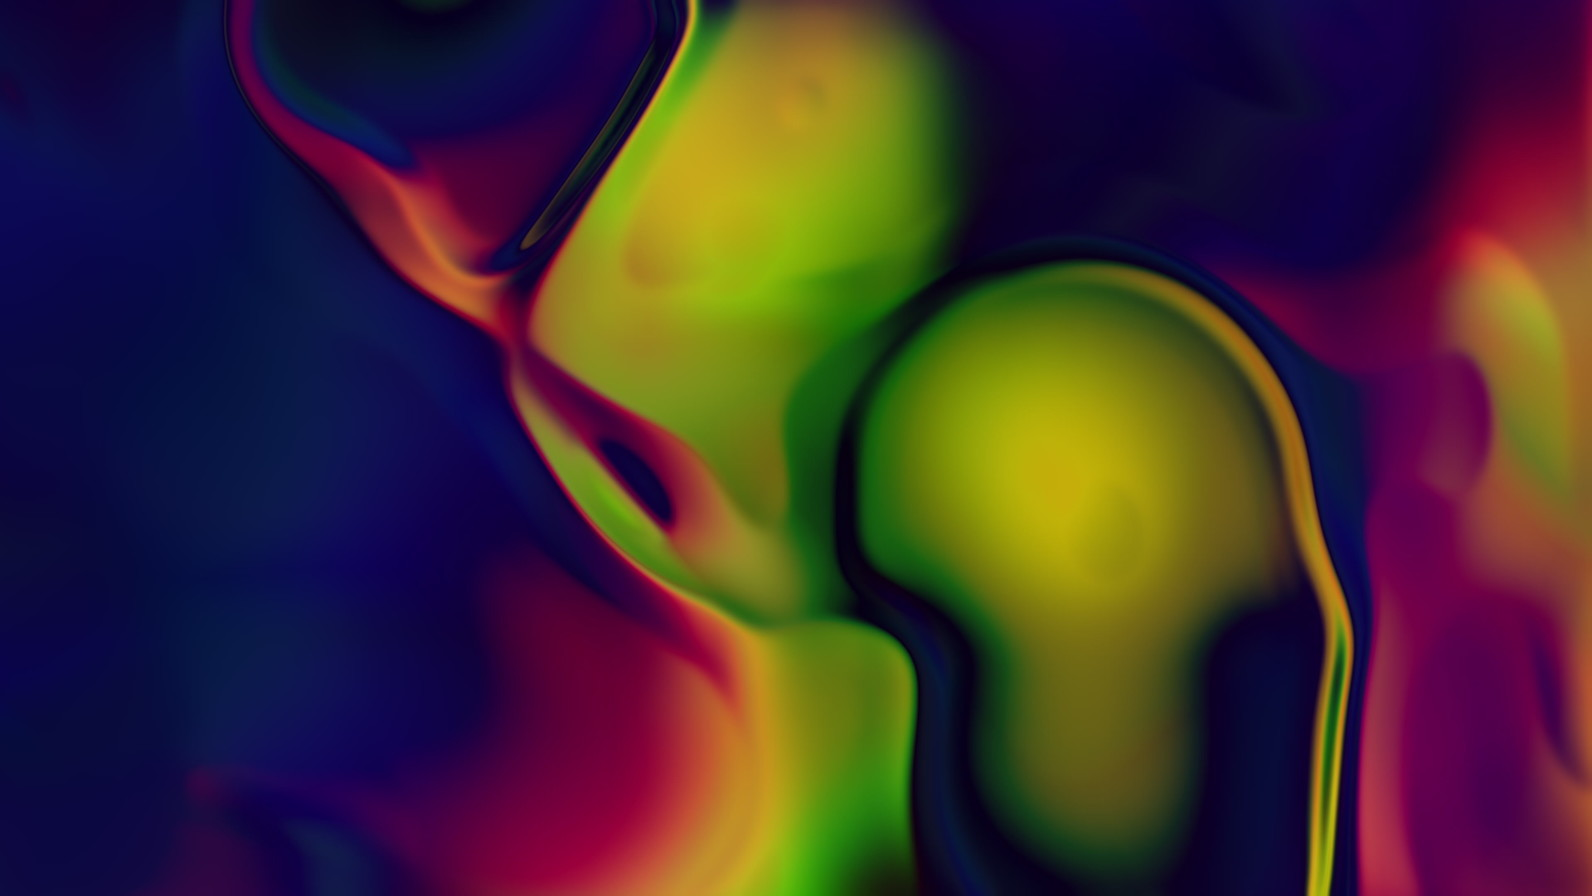 Abstract Liquid Animation 03